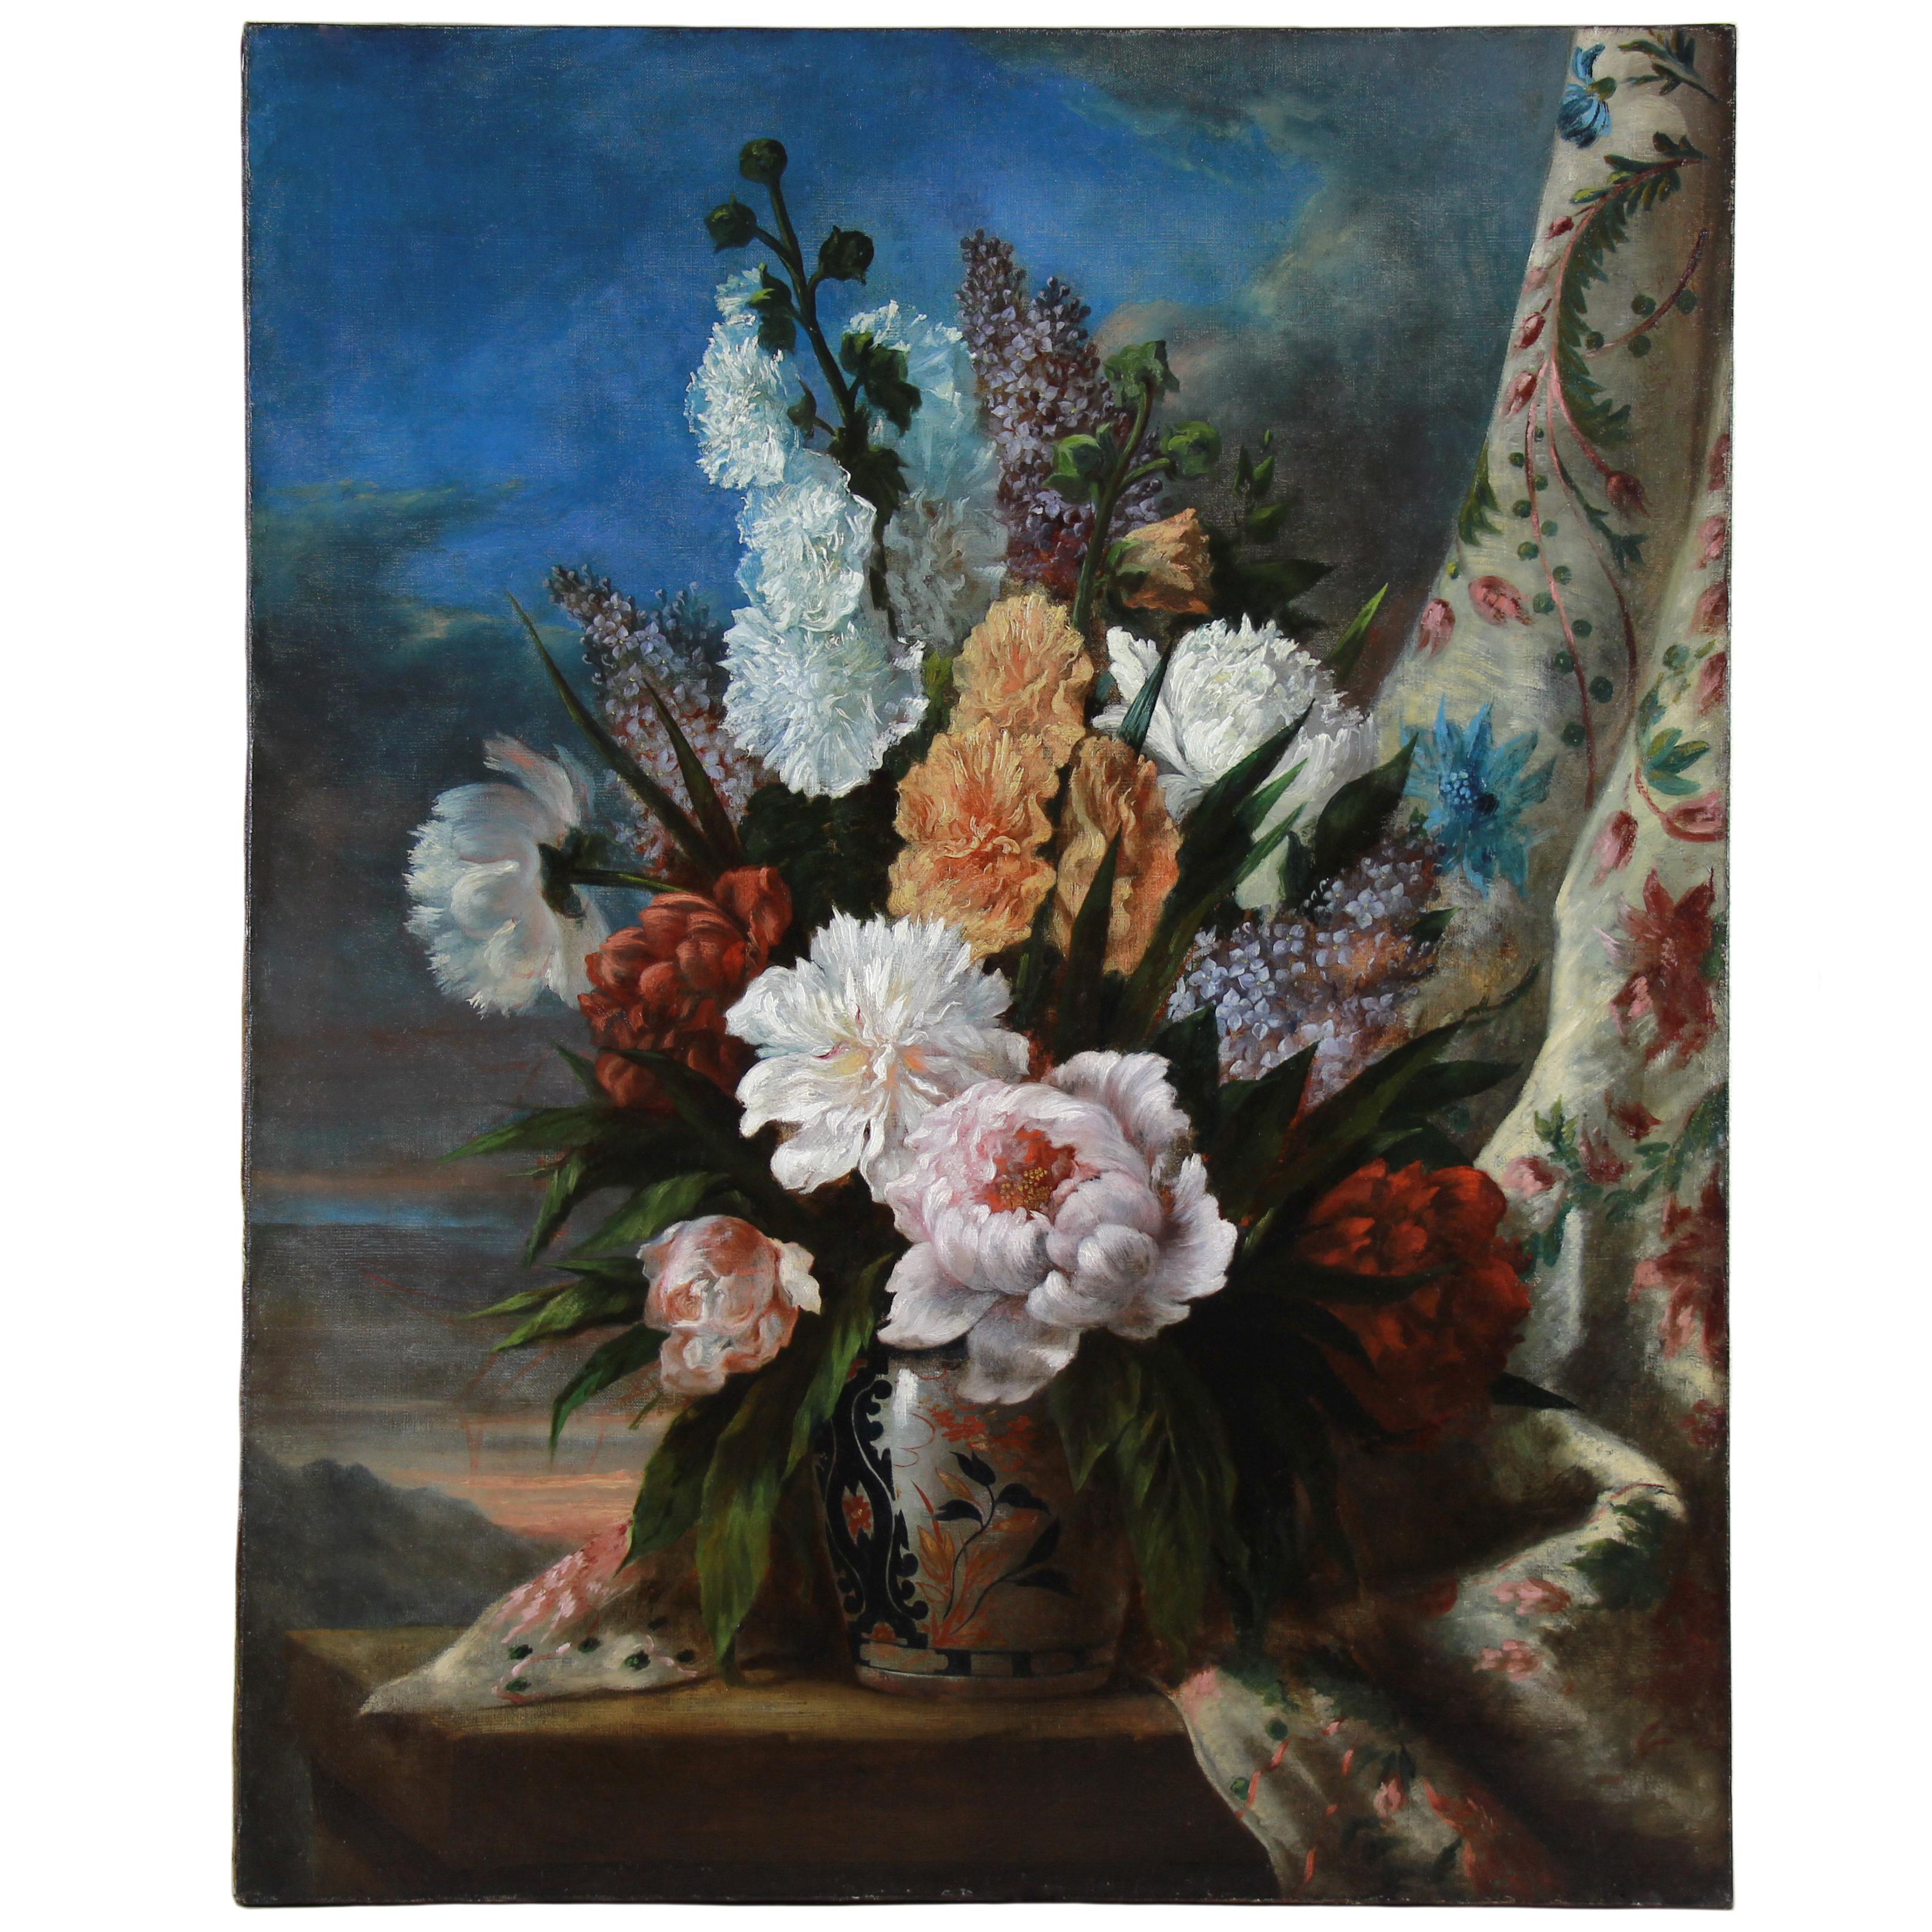 Cornelis Van Spaendonck (attr.) Still-Life Painting - Oil On Canvas "Still life with flowers and vase" Atr. to Cornelis van Spaendonck